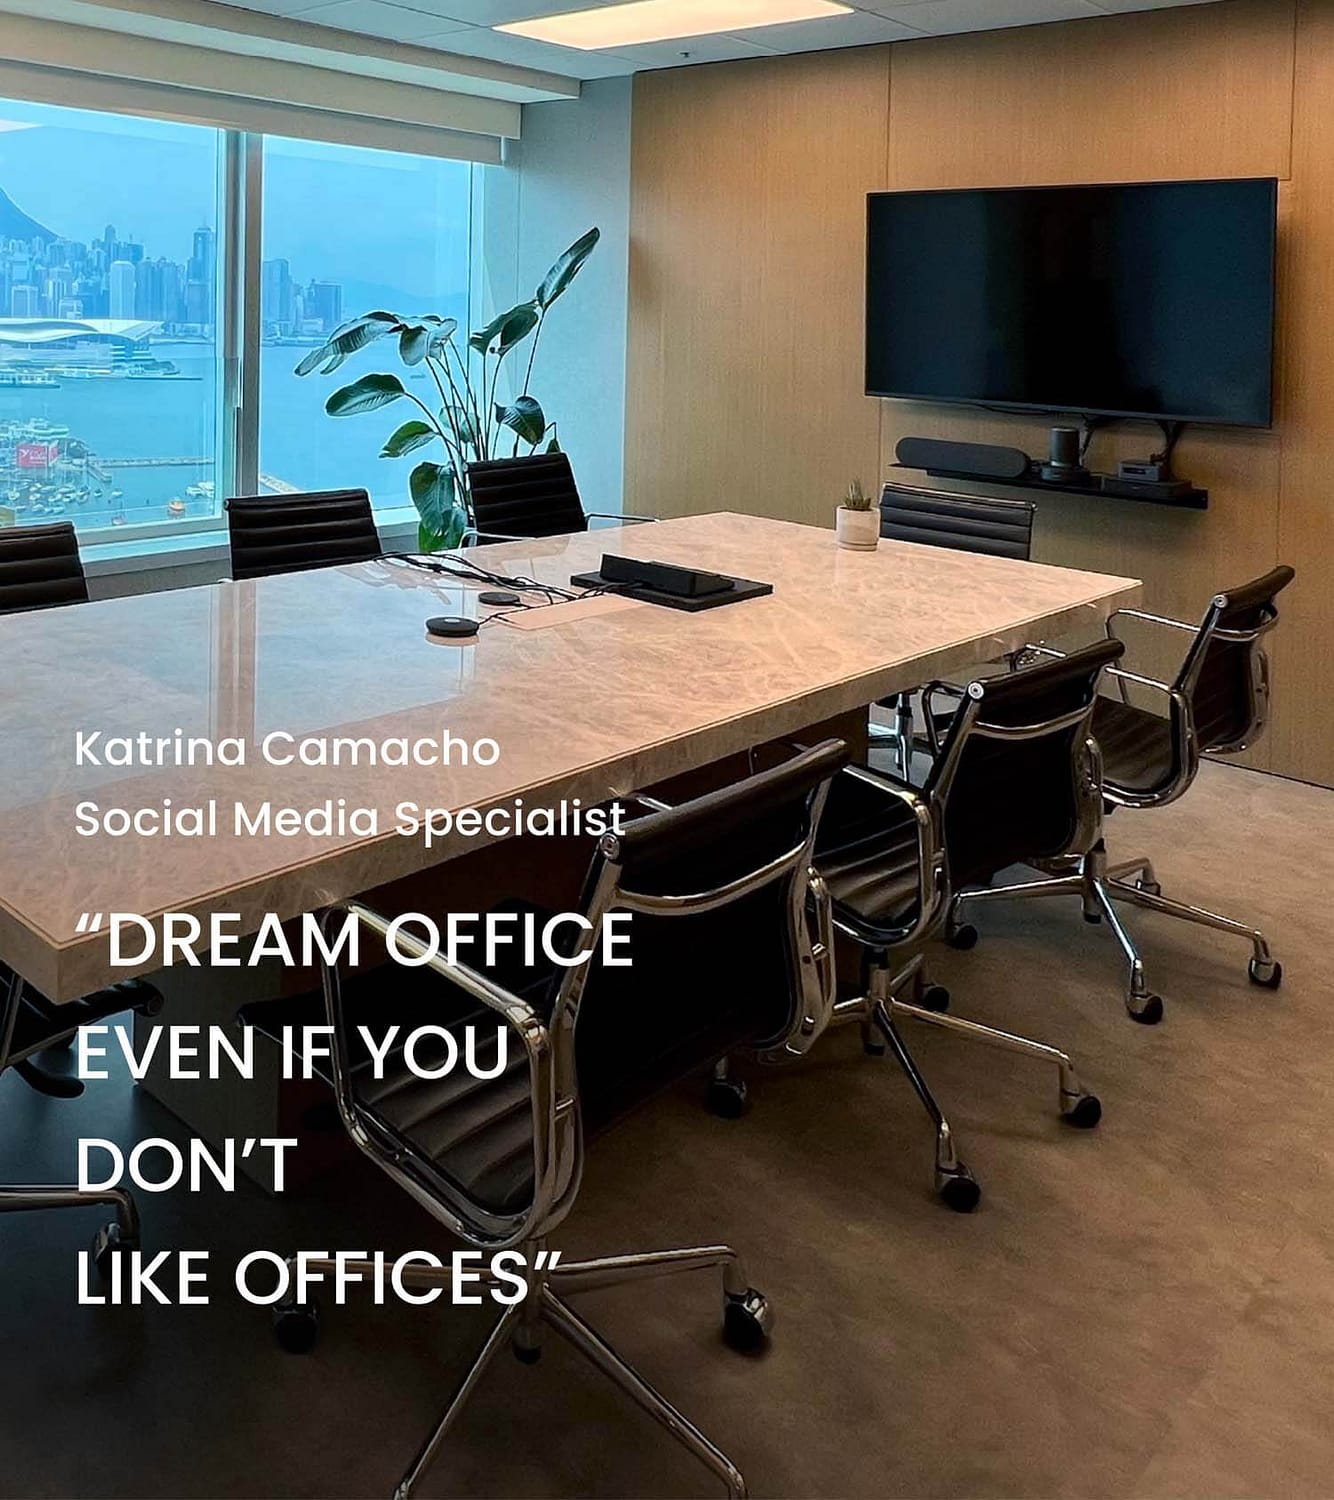 Dream office